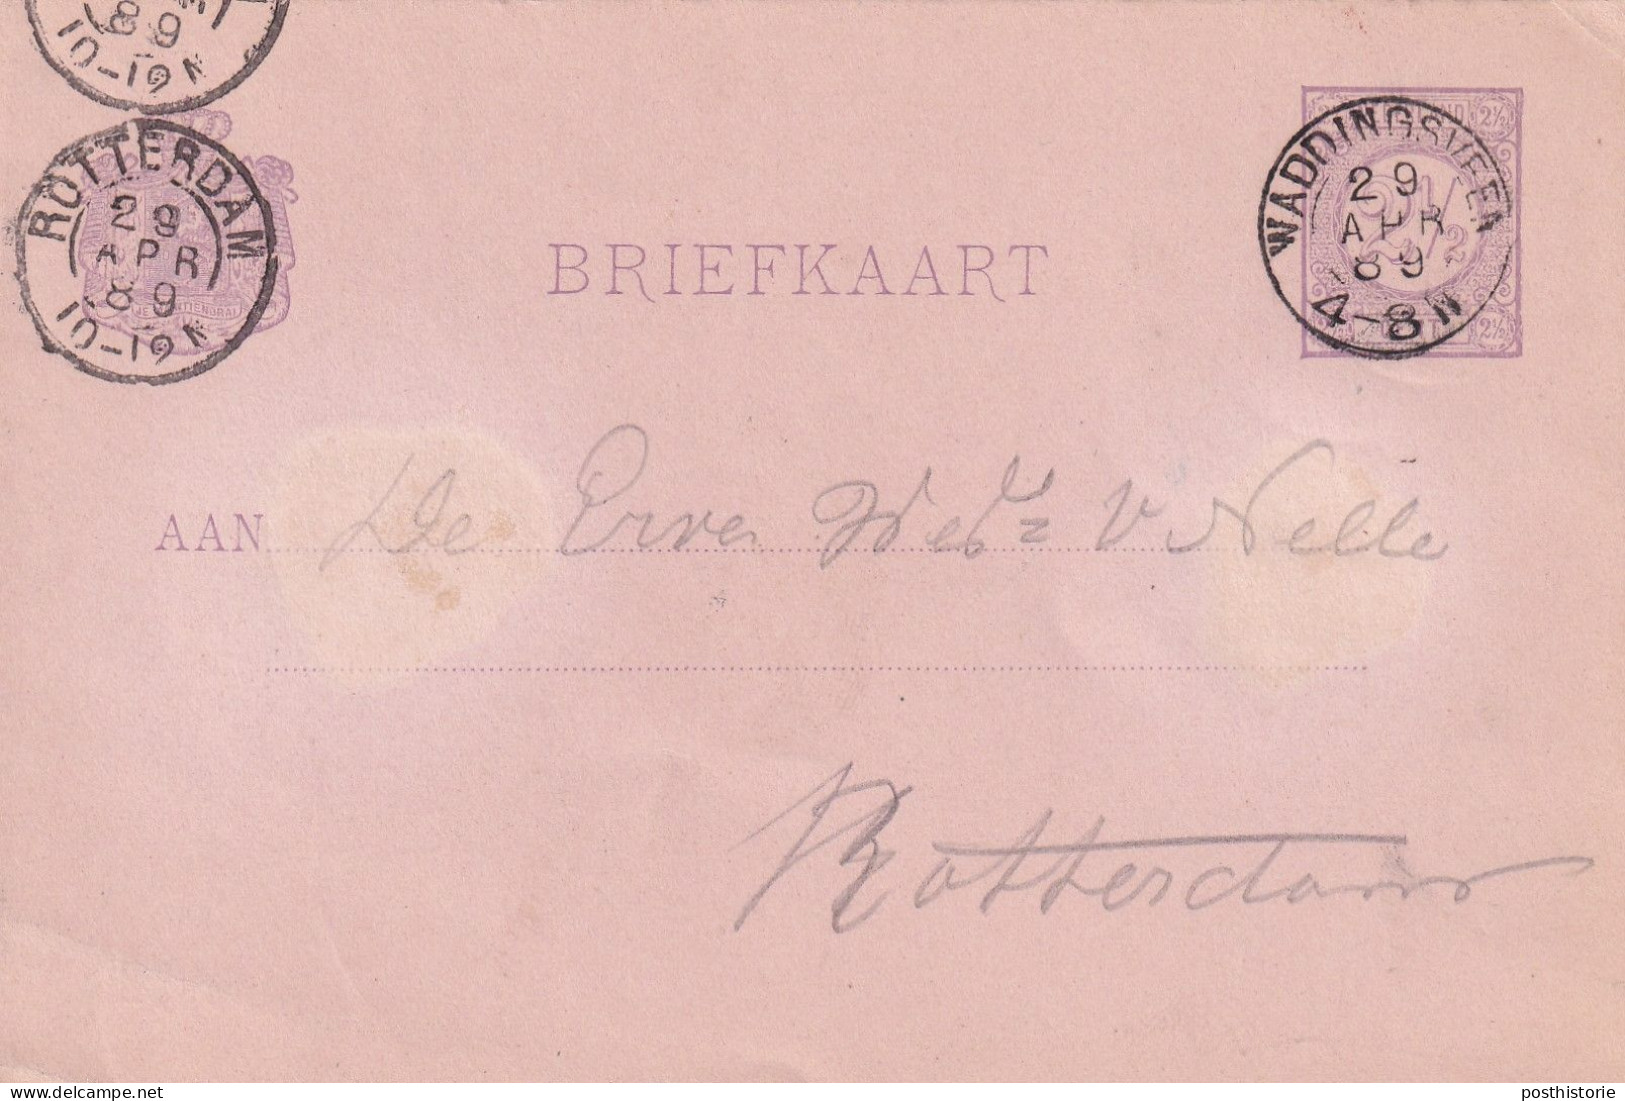 Briefkaart 29 Apr 1889 Waddingsveen (hulpkantoor Kleinrond) Naar Rotterdam - Storia Postale